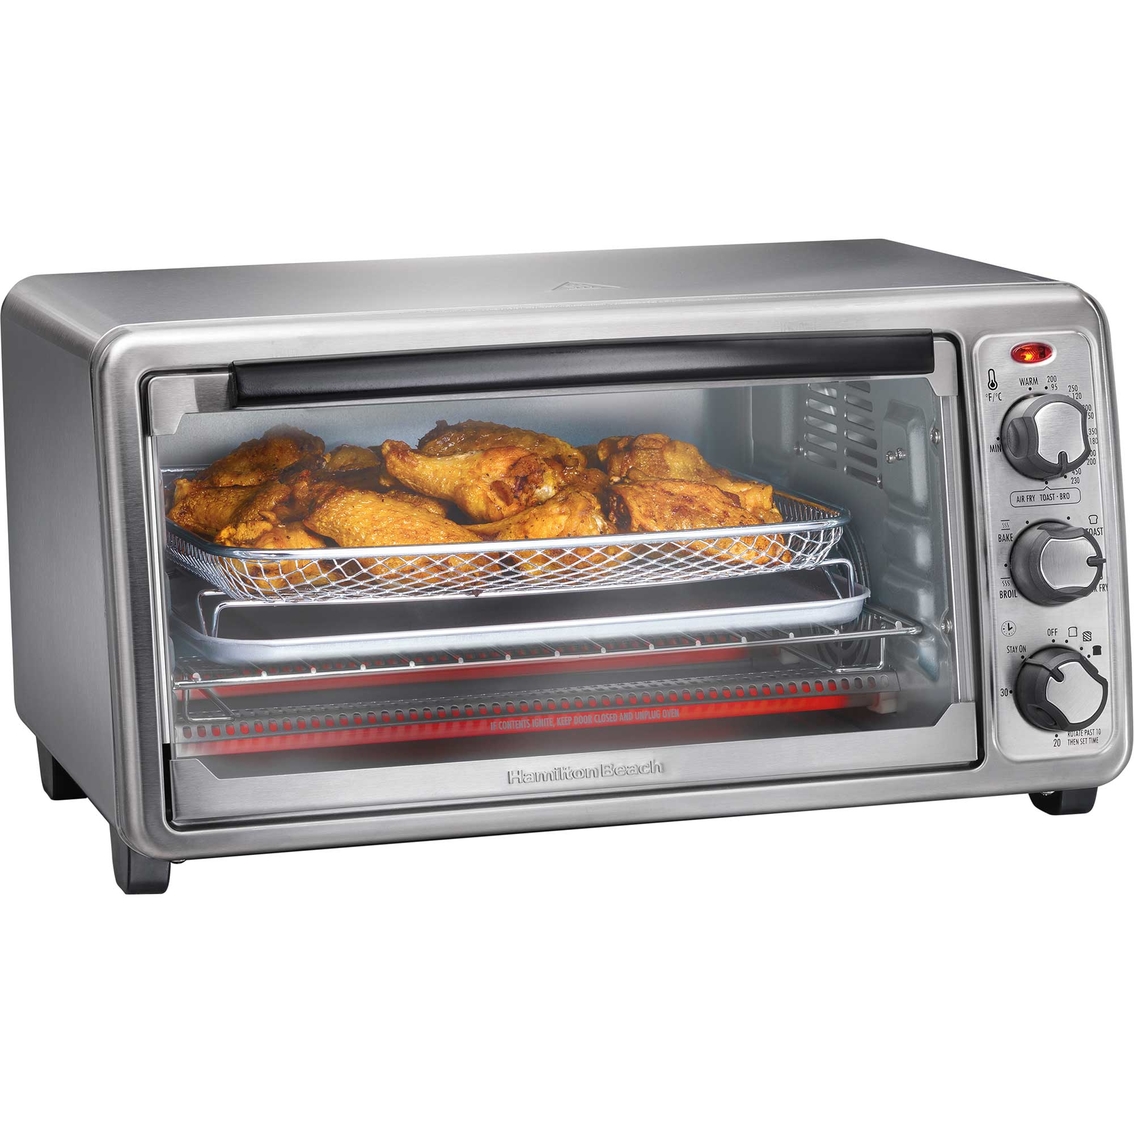 Hamilton Beach Easy Reach Sure-crisp Air Fryer Toaster Oven w/ Crumb Tray  31413